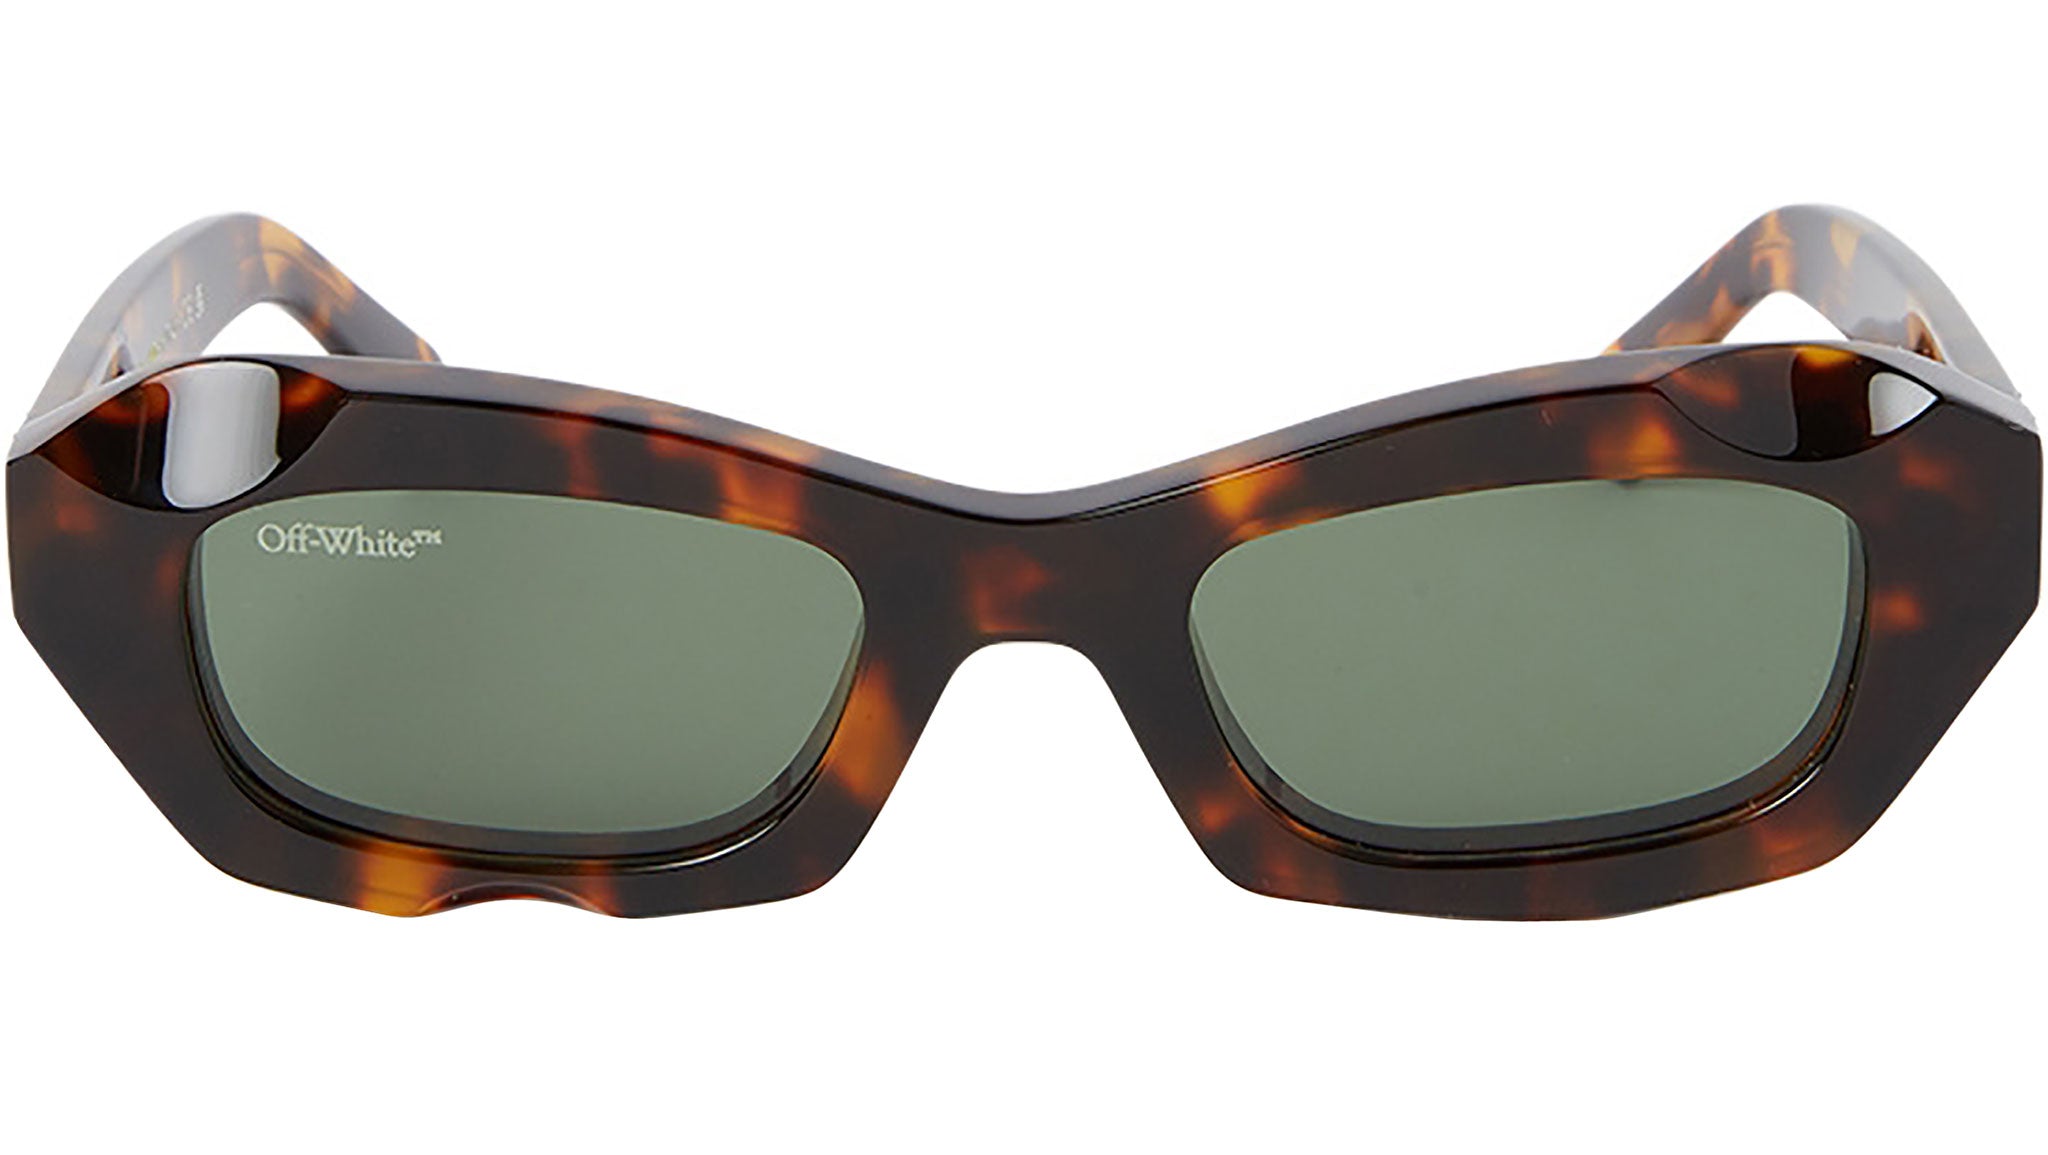 Loewe Rectangle Sunglasses in Shiny Green Marble